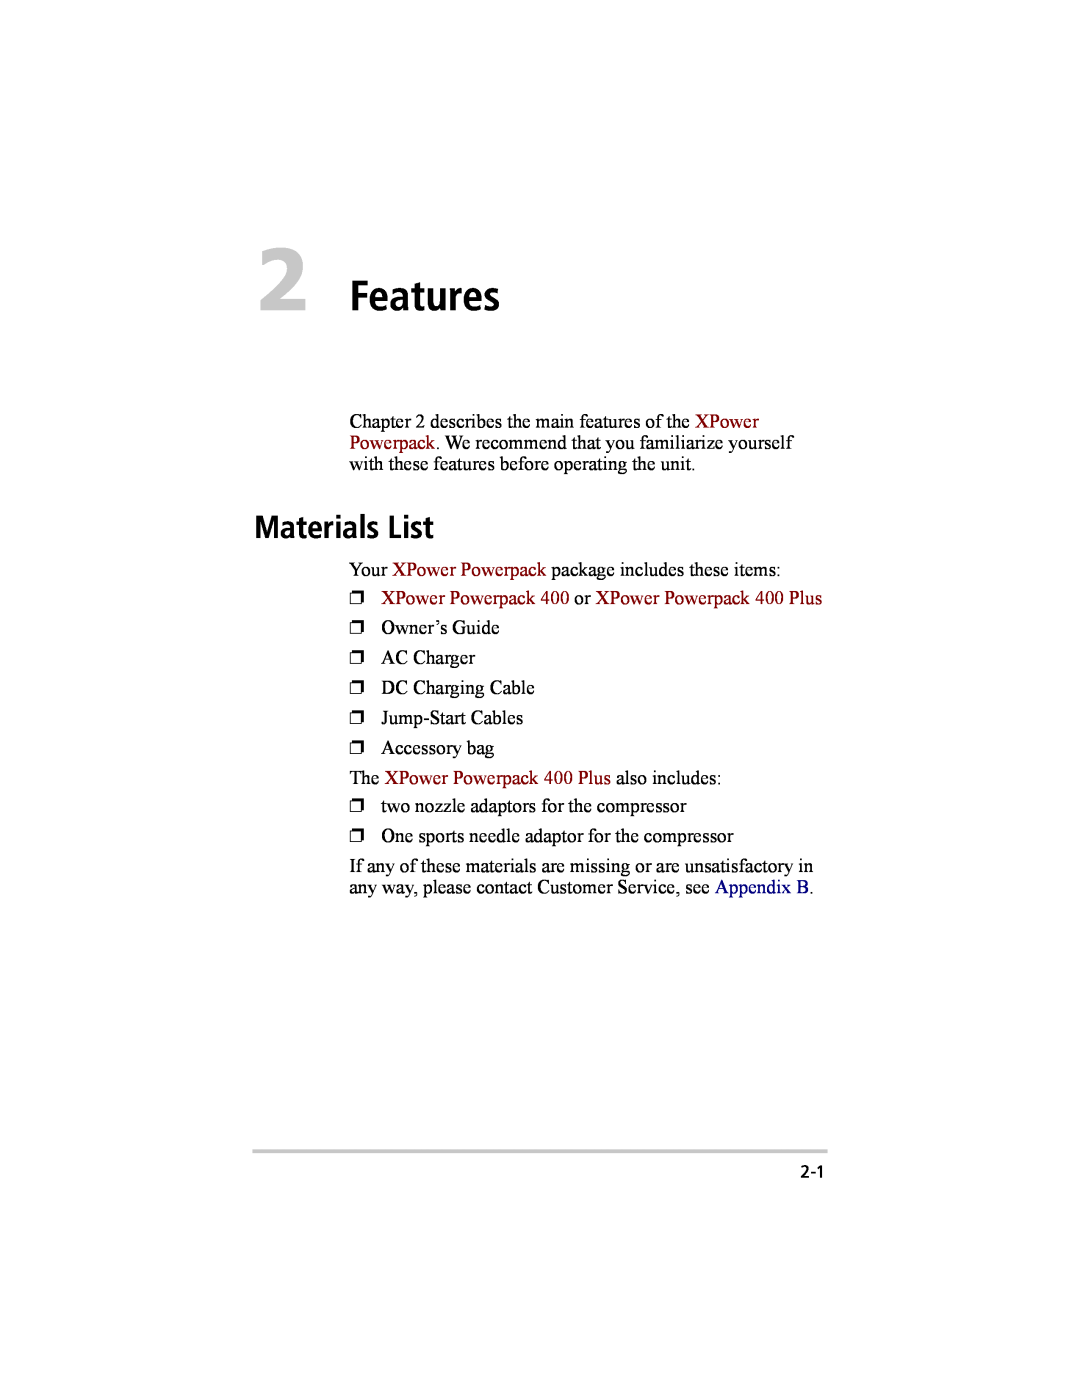 Xantrex Technology 200 manual Features, Materials List 